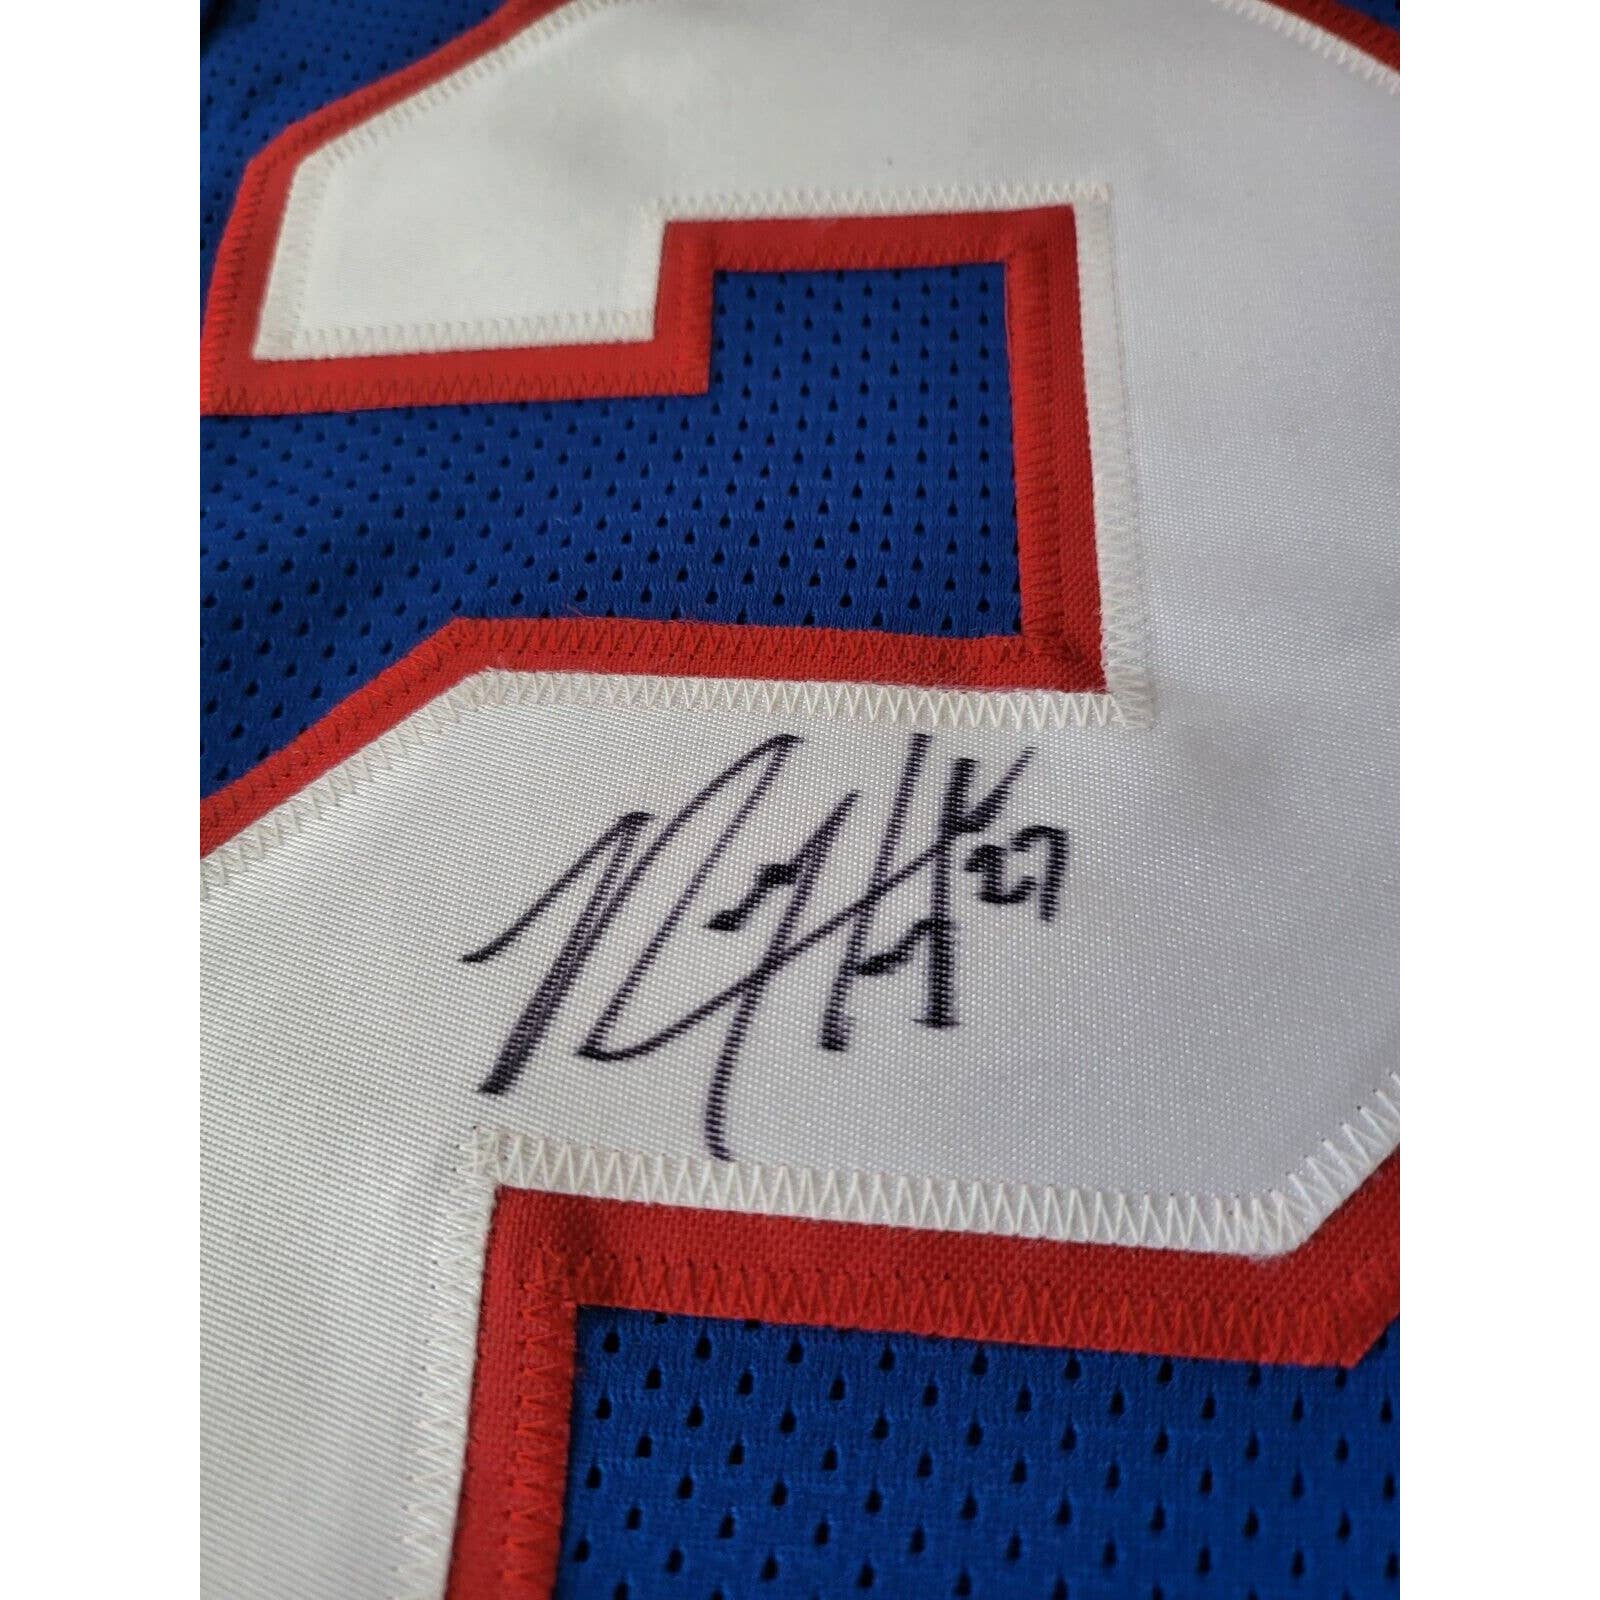 Rodney Hampton Autographed/Signed Jersey JSA COA New York Giants - TreasuresEvolved